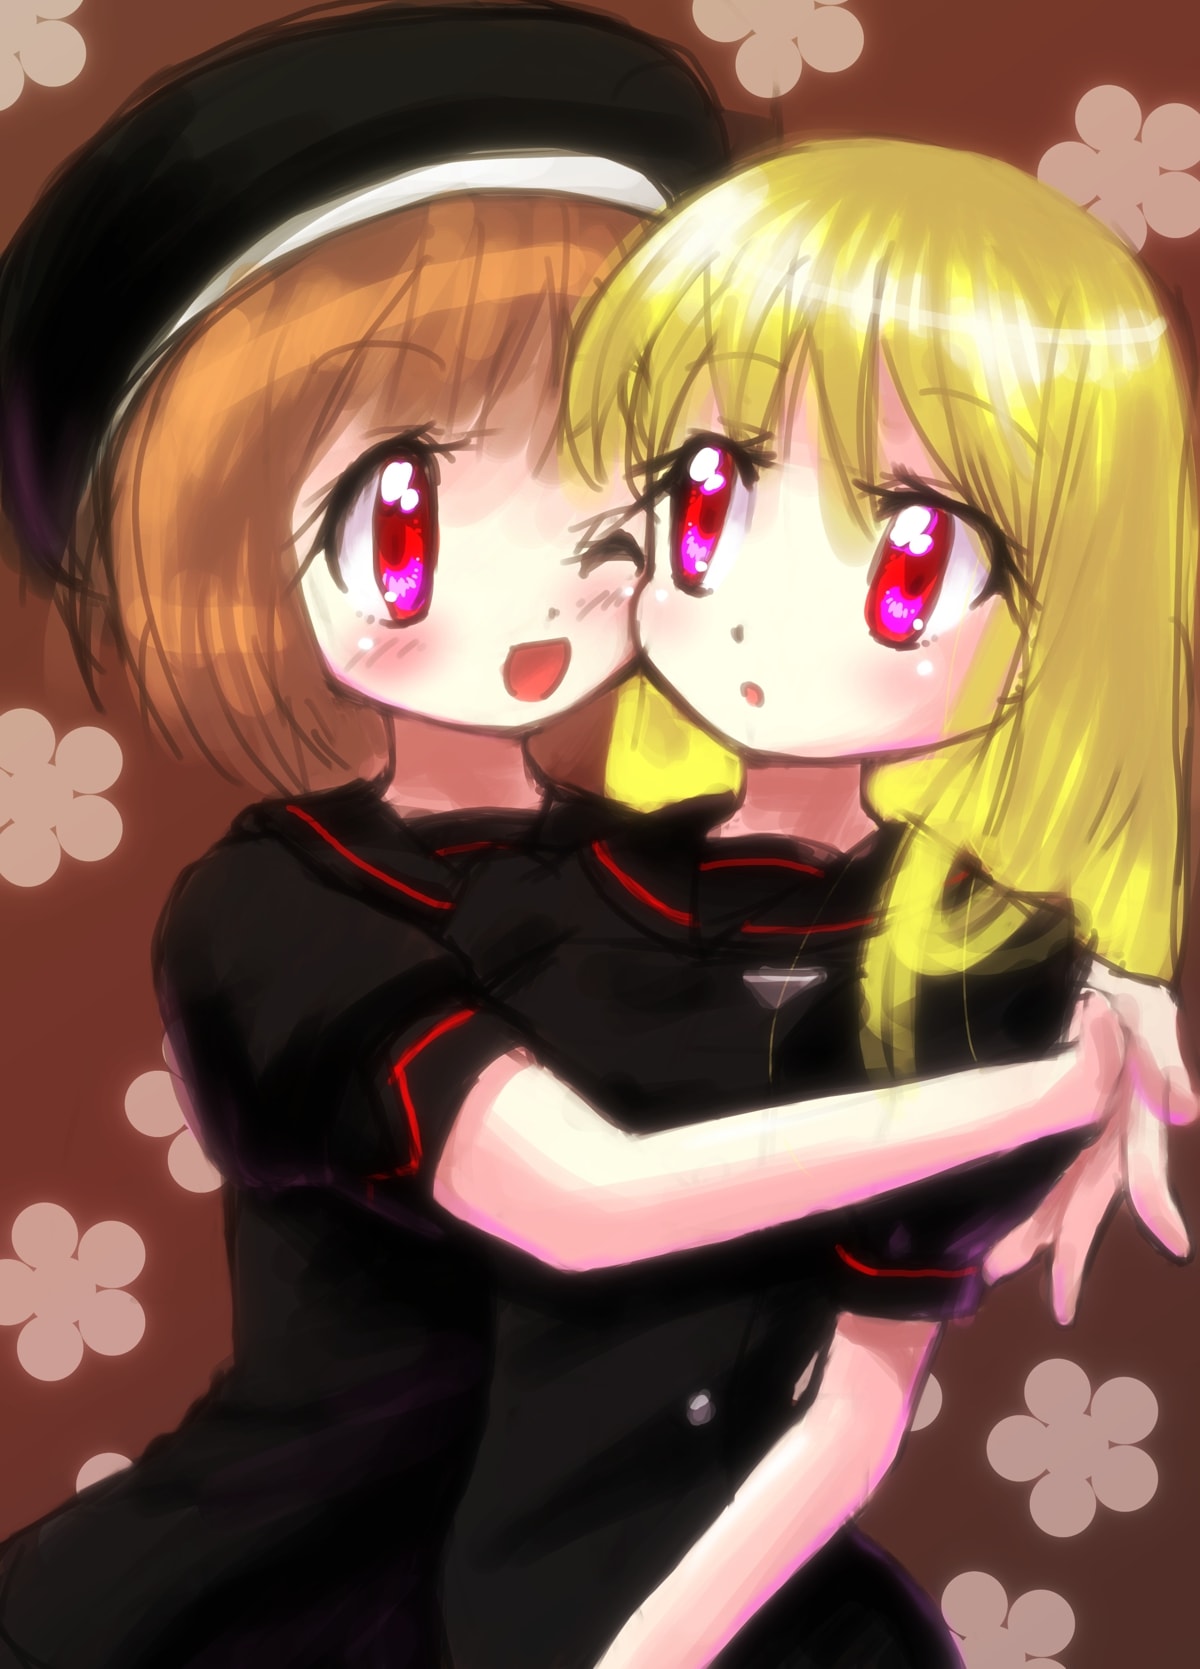 Manga Yuri en la que una chica abraza a otra